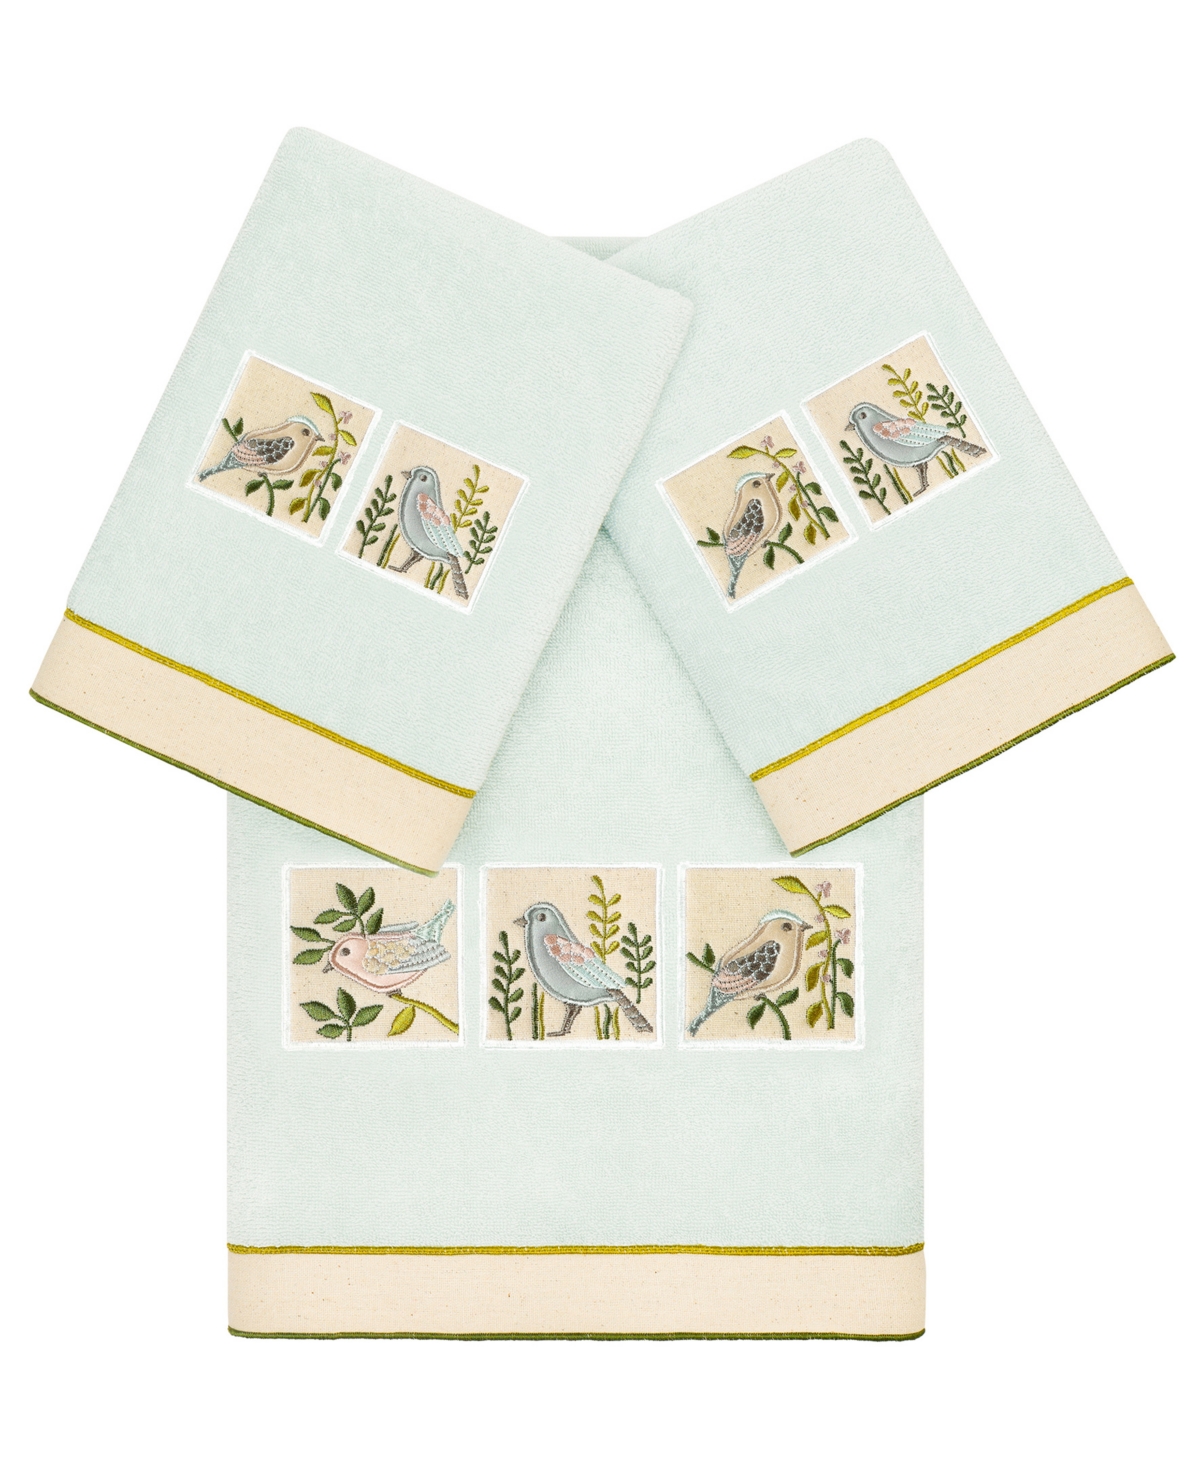 Linum Home Textiles Turkish Cotton Belinda Embellished Towel Set, 3 Piece Bedding In Aqua